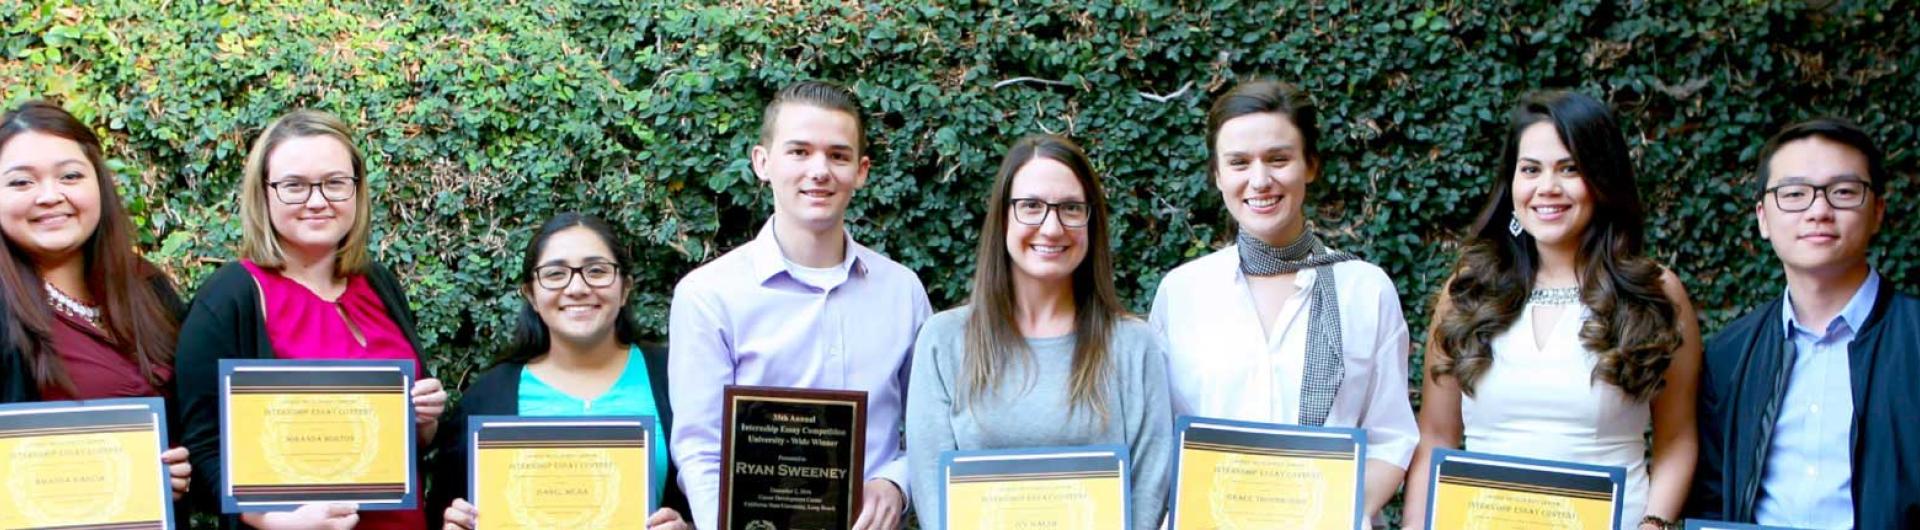 8 Student winners of the CDC Internship Essay Contest Scholarship